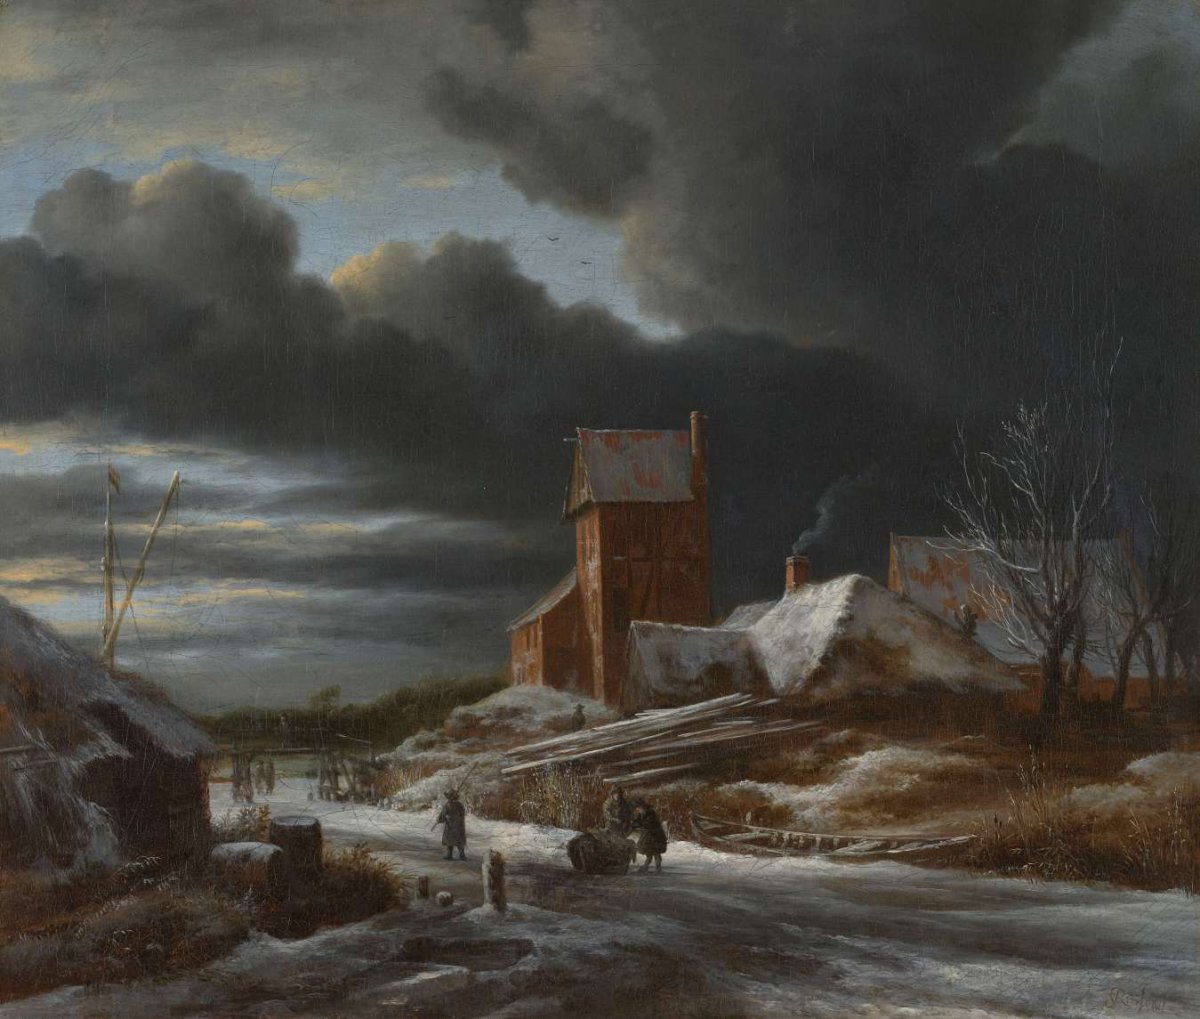 Winter Landscape, Jacob Isaacksz van Ruisdael, c. 1665